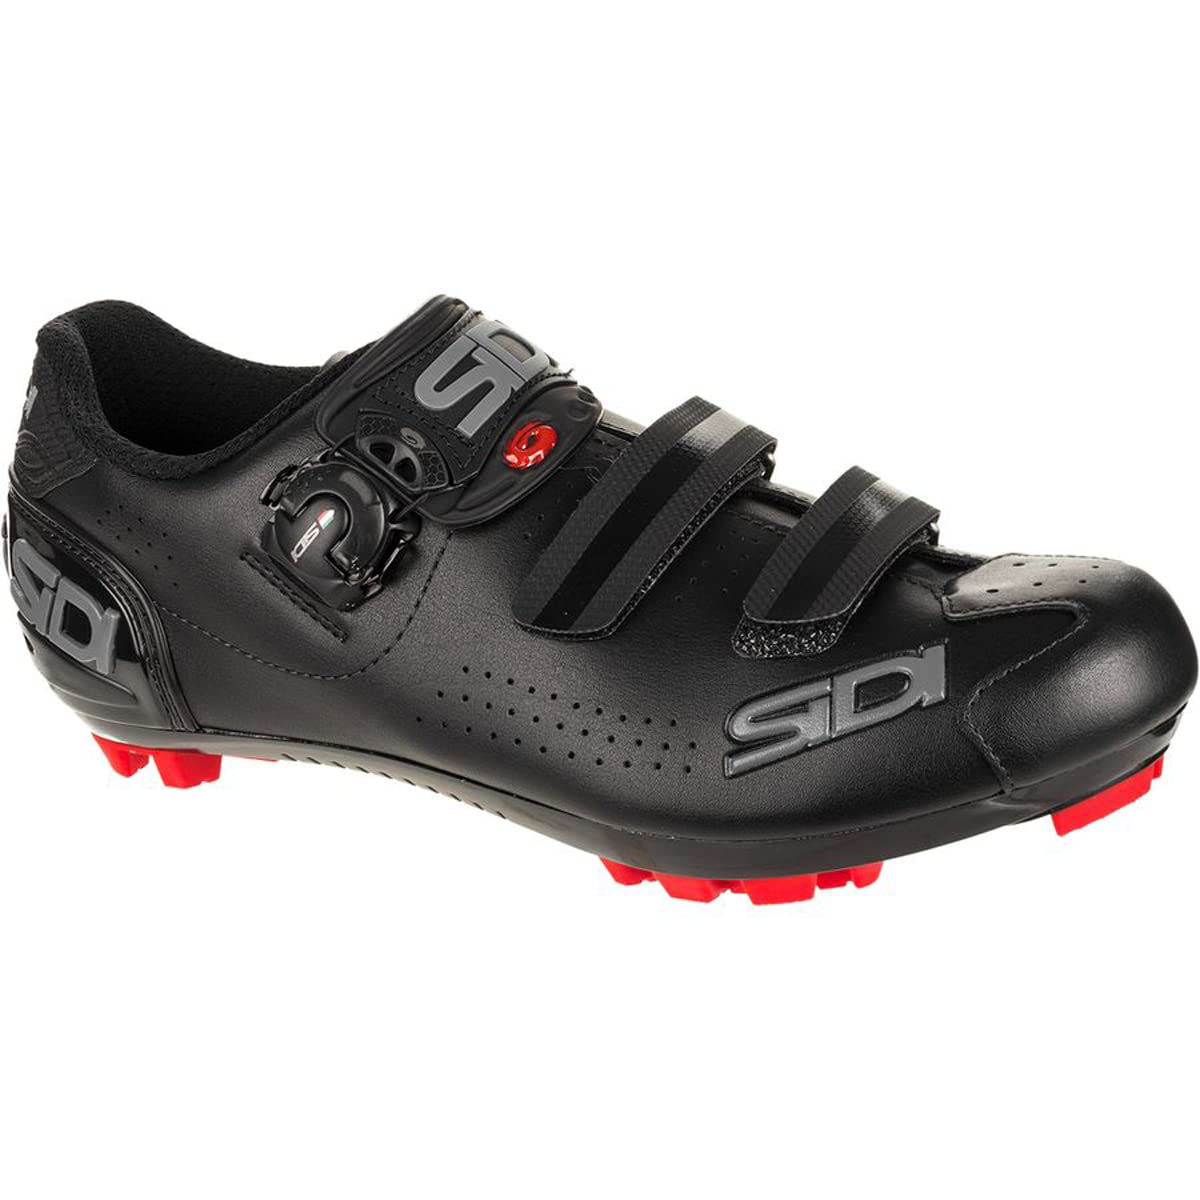 Sidi Men's Trace 2 Cycling Shoes, Black/Black, 8